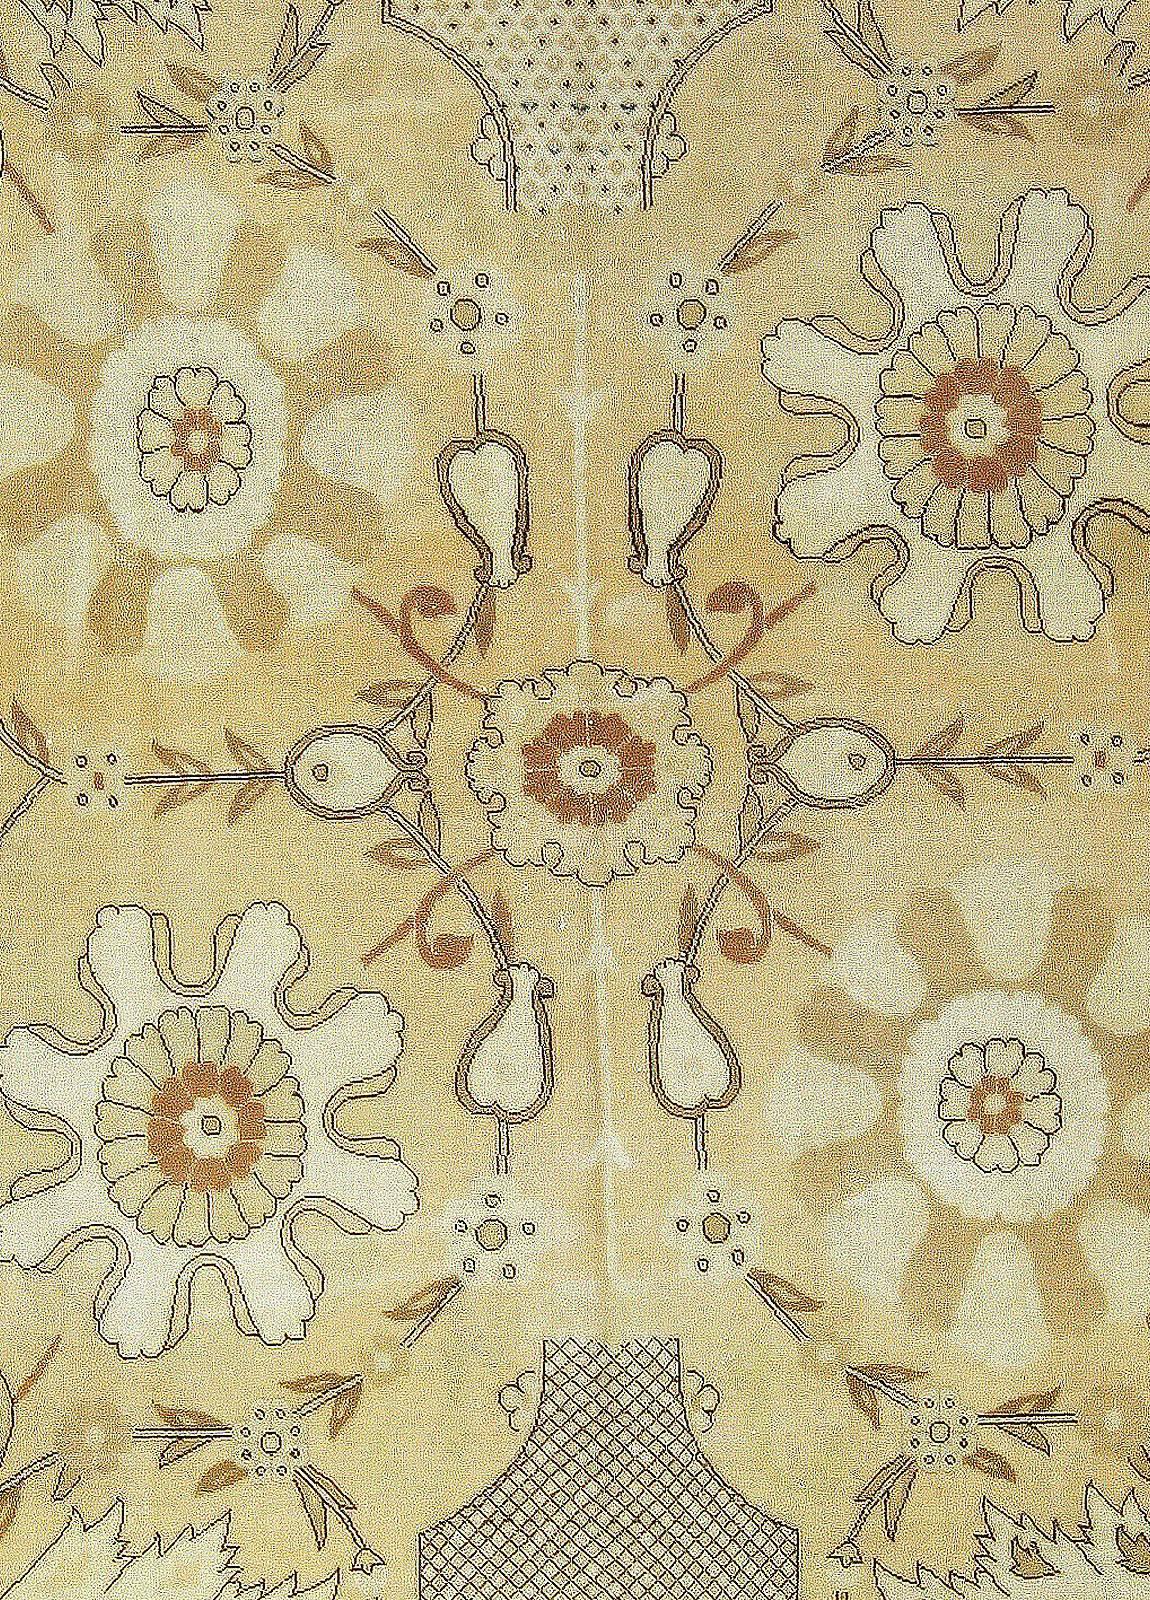 Contemporary Tabriz design handmade wool rug by Doris Leslie Blau.
Size: 9.9